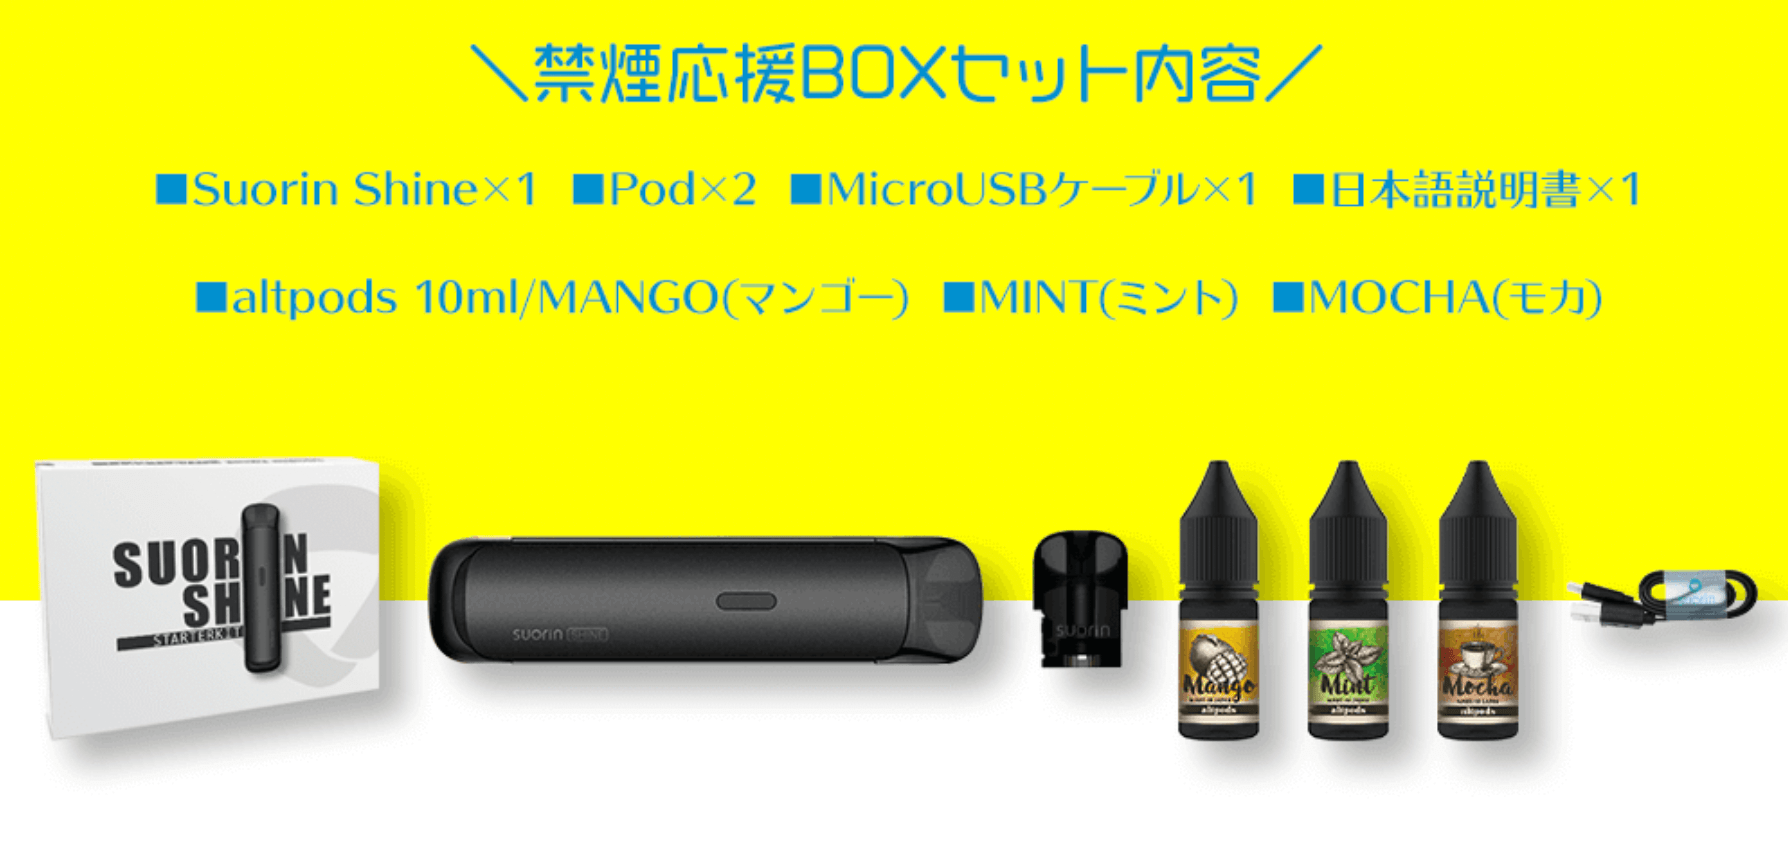 Suorin Shineの禁煙応援BOXセット